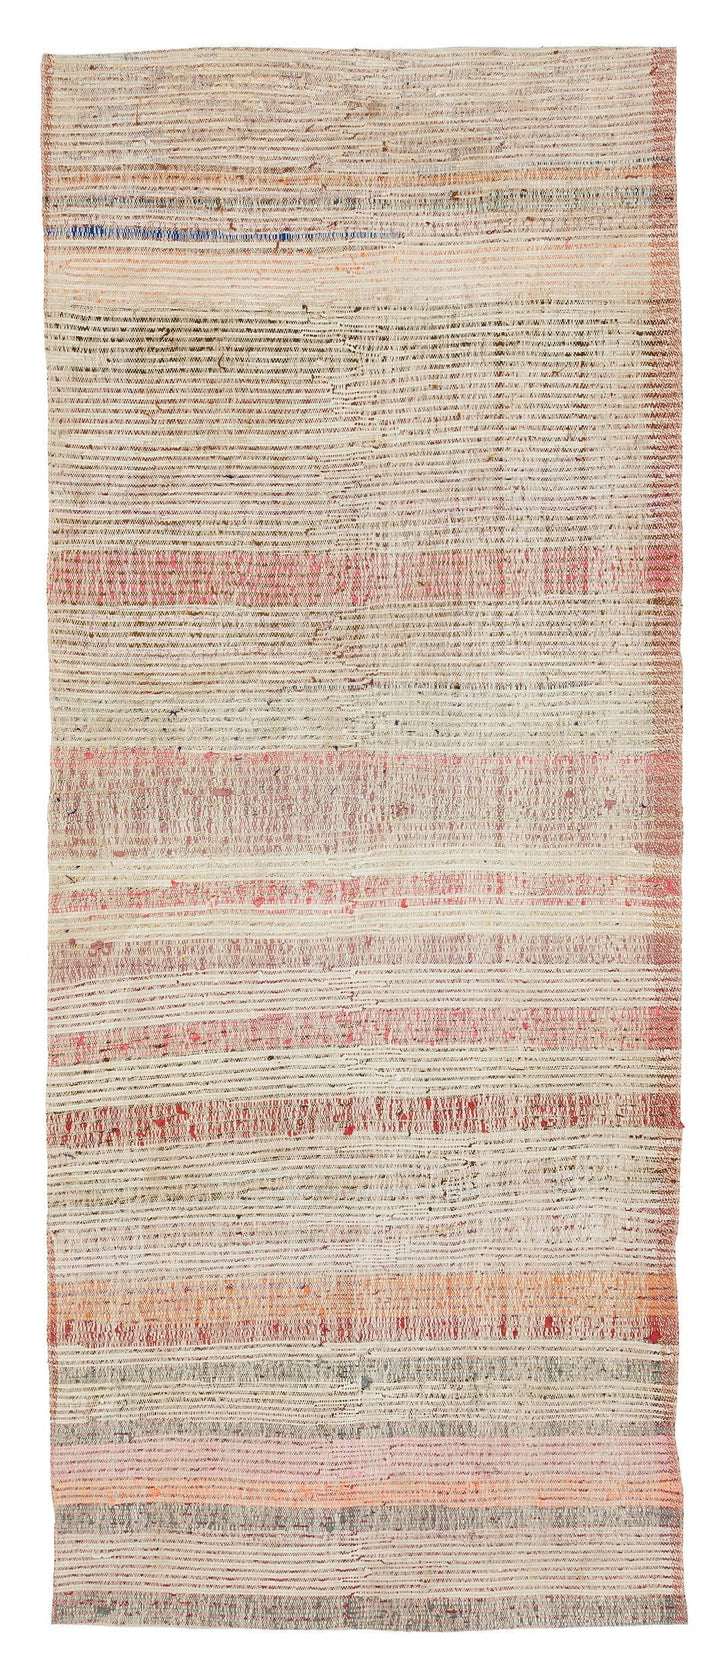 Cretan Beige Striped Wool Hand-Woven Carpet 097 x 249